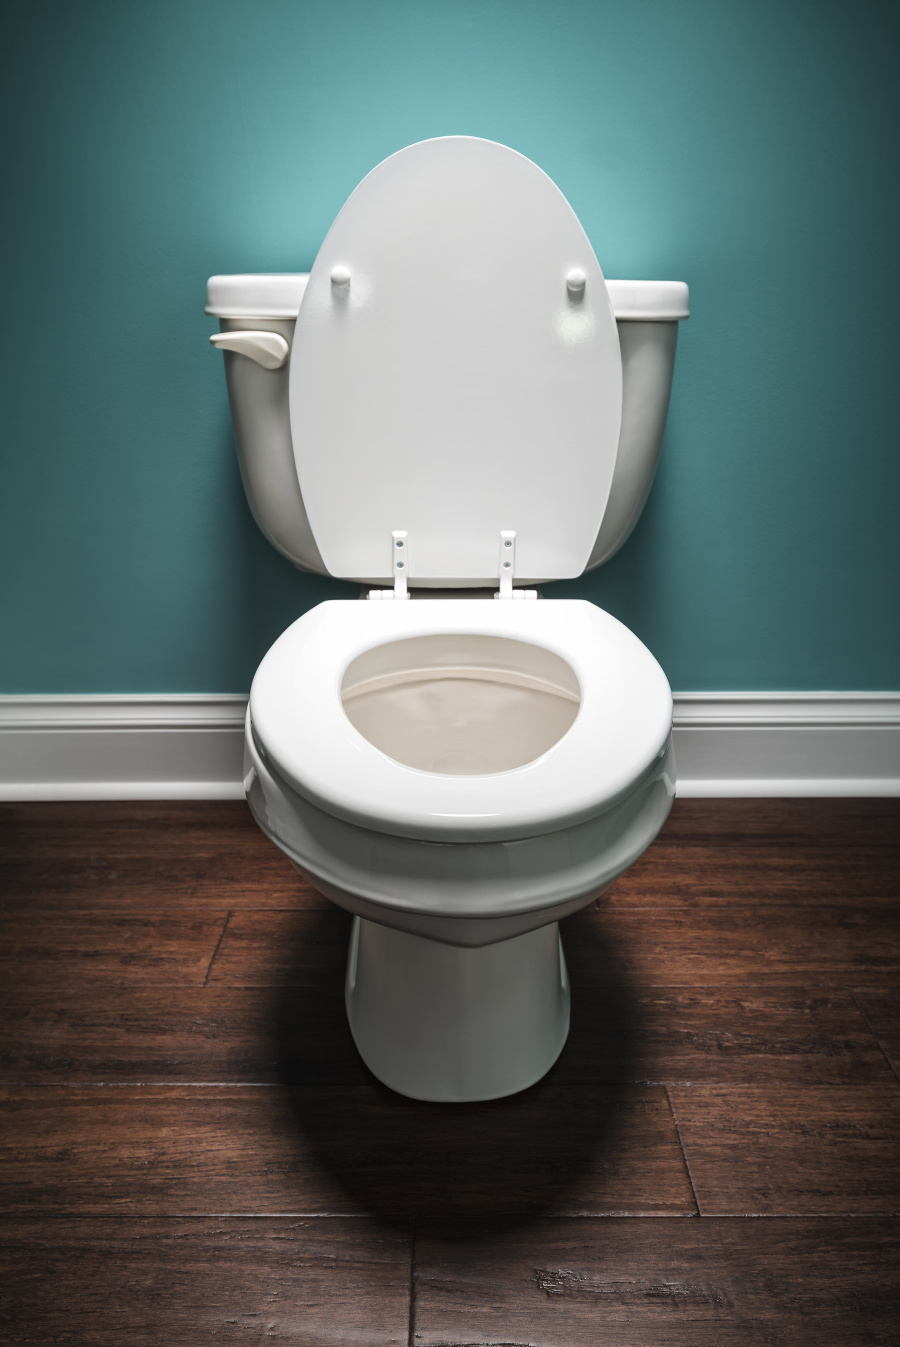 A elongated white toilet